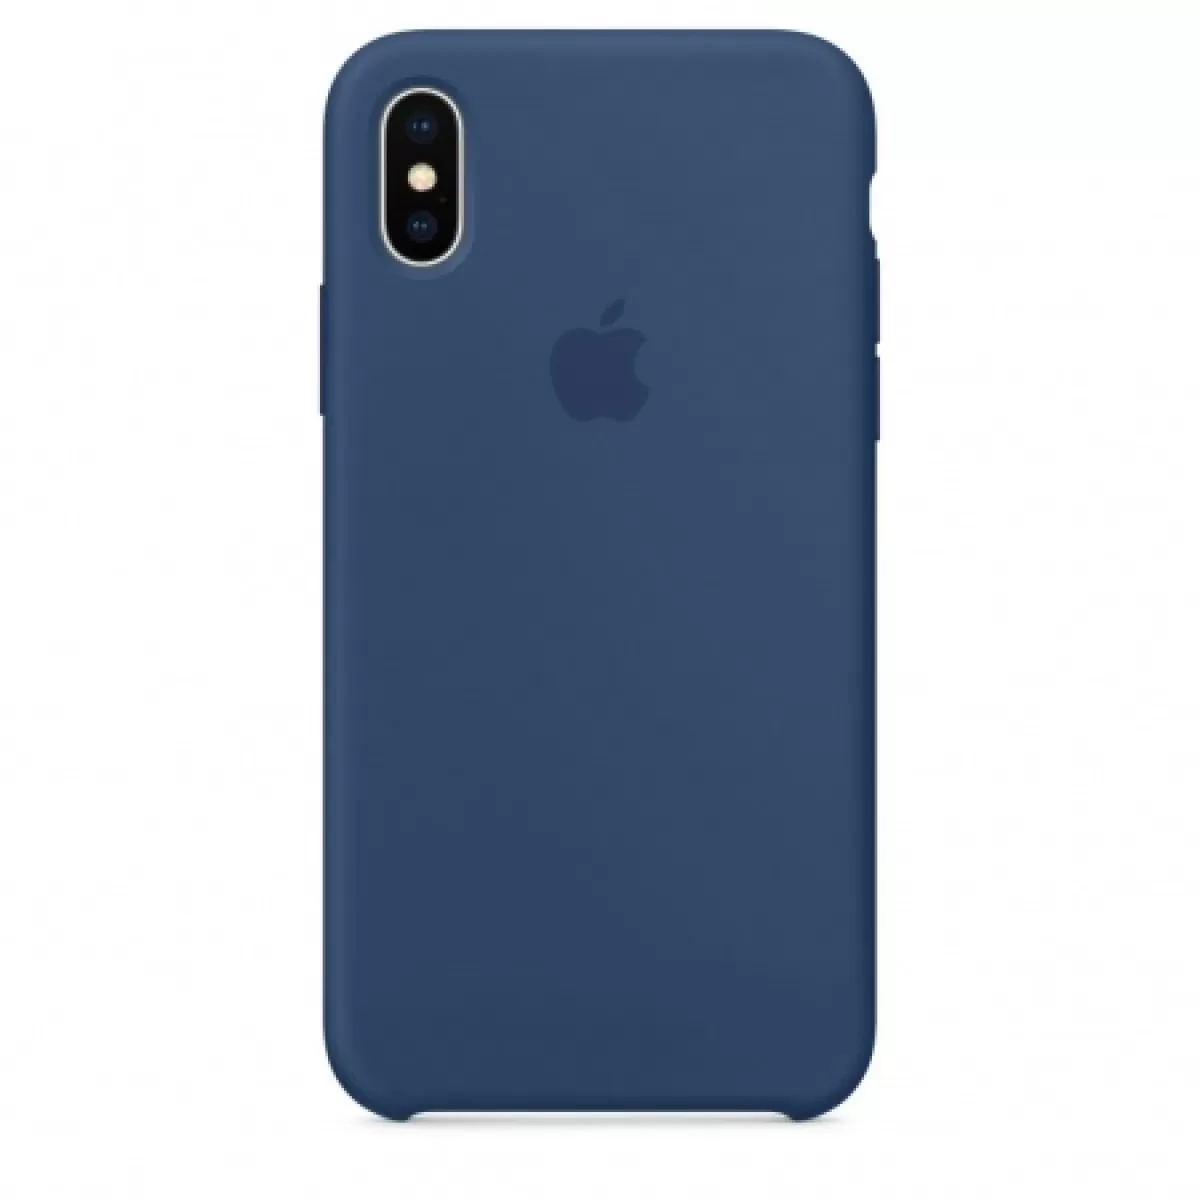 Apple iPhone X Silicone Case Blue Cobalt